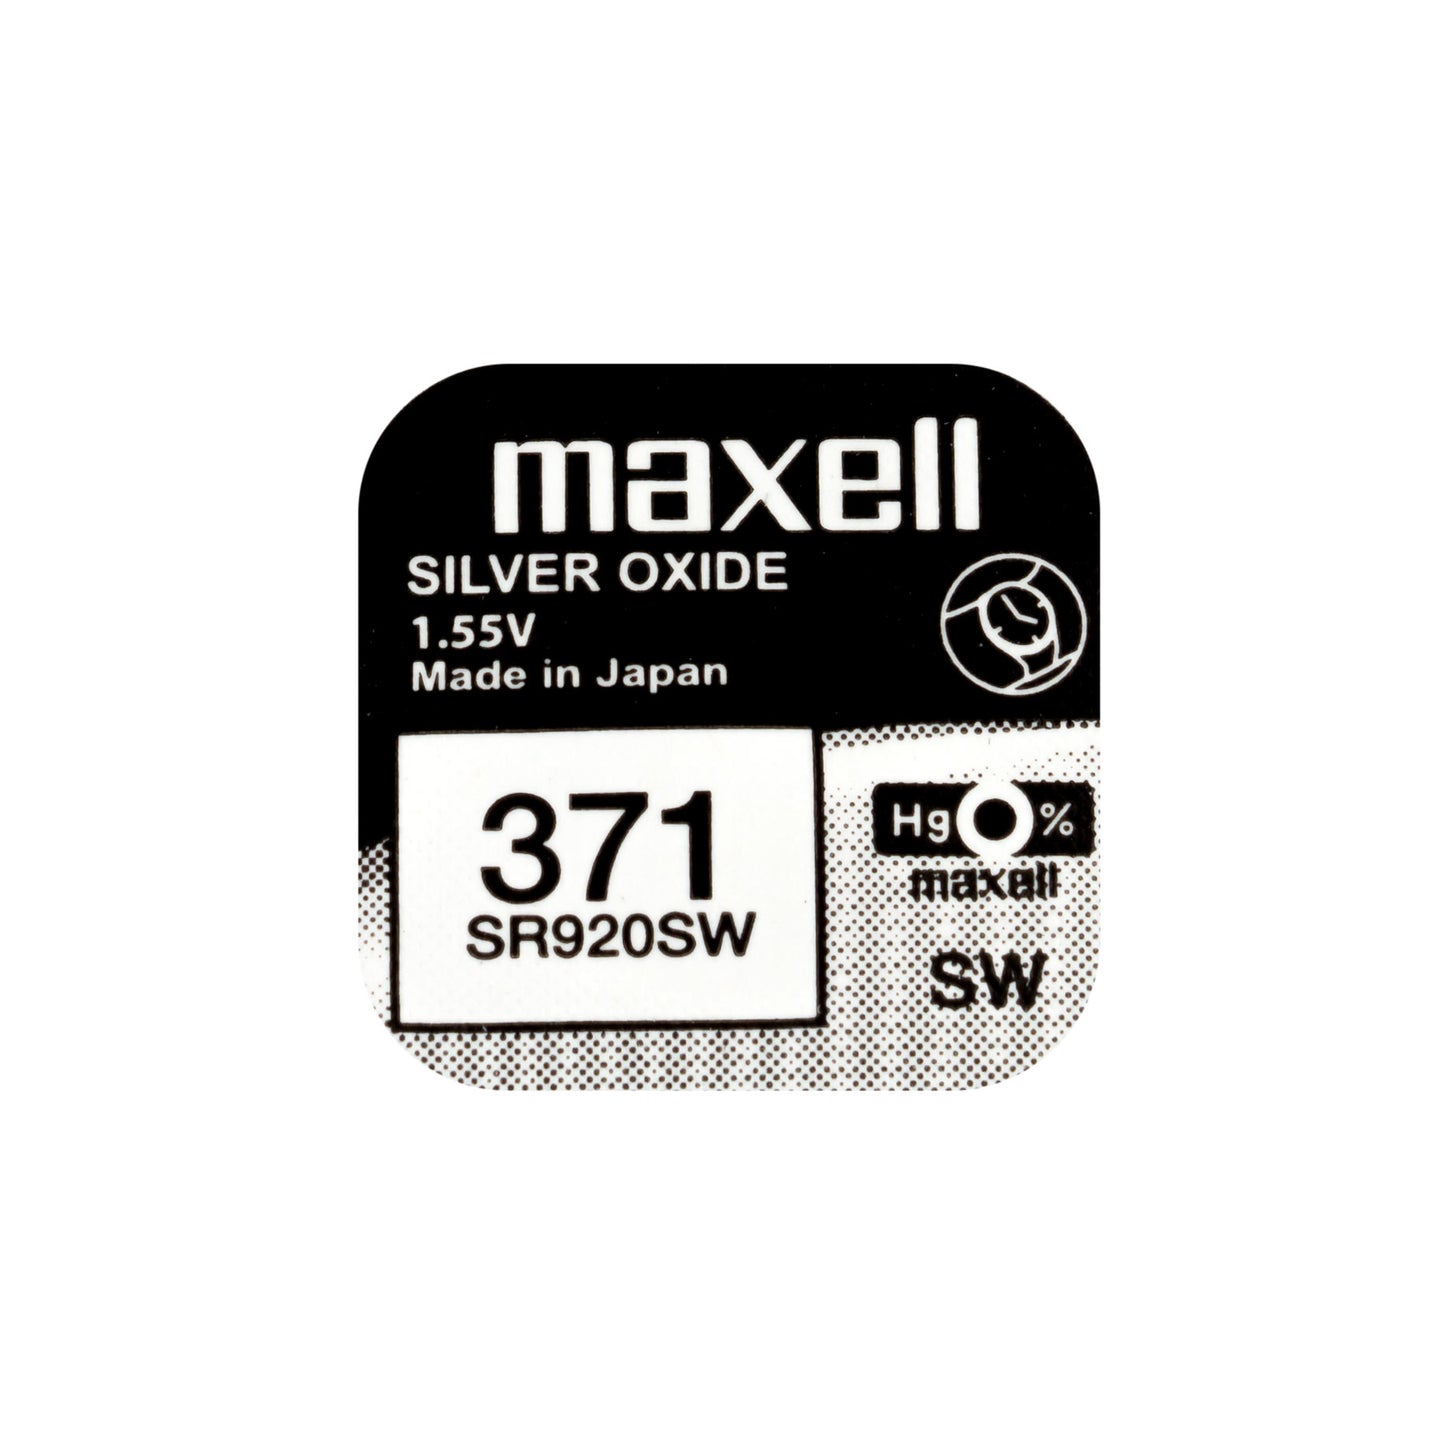 Maxell SR920SW (371) Silver Oxide Watch Batteries